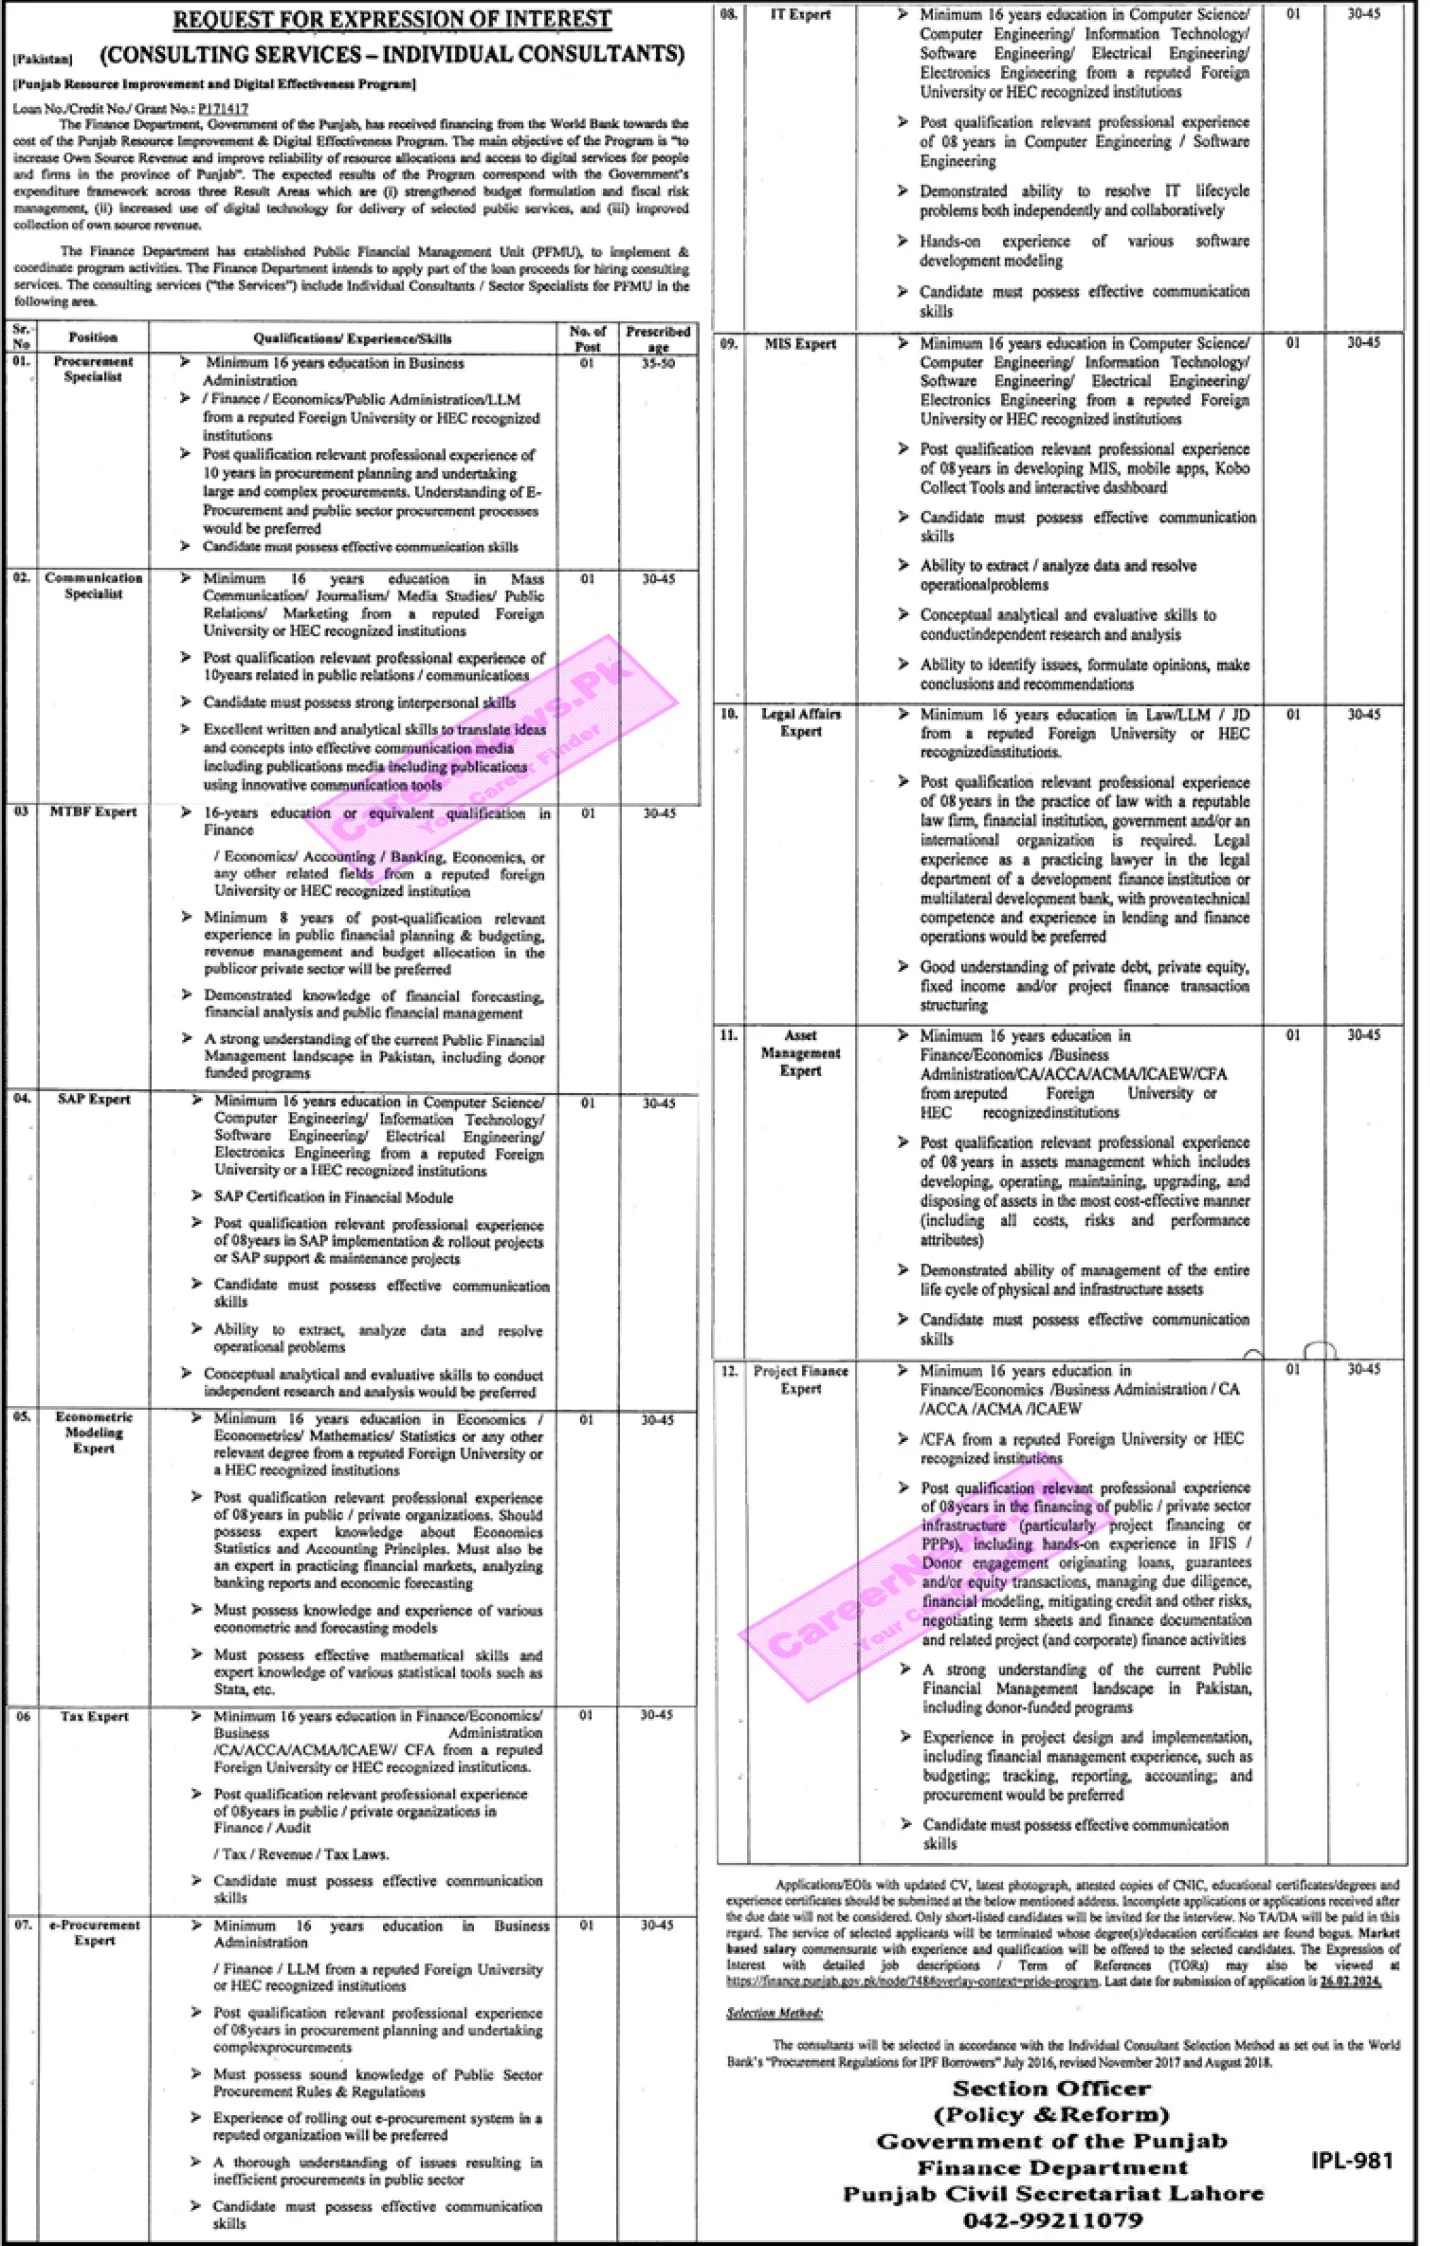 Finance Department Punjab Jobs 2024